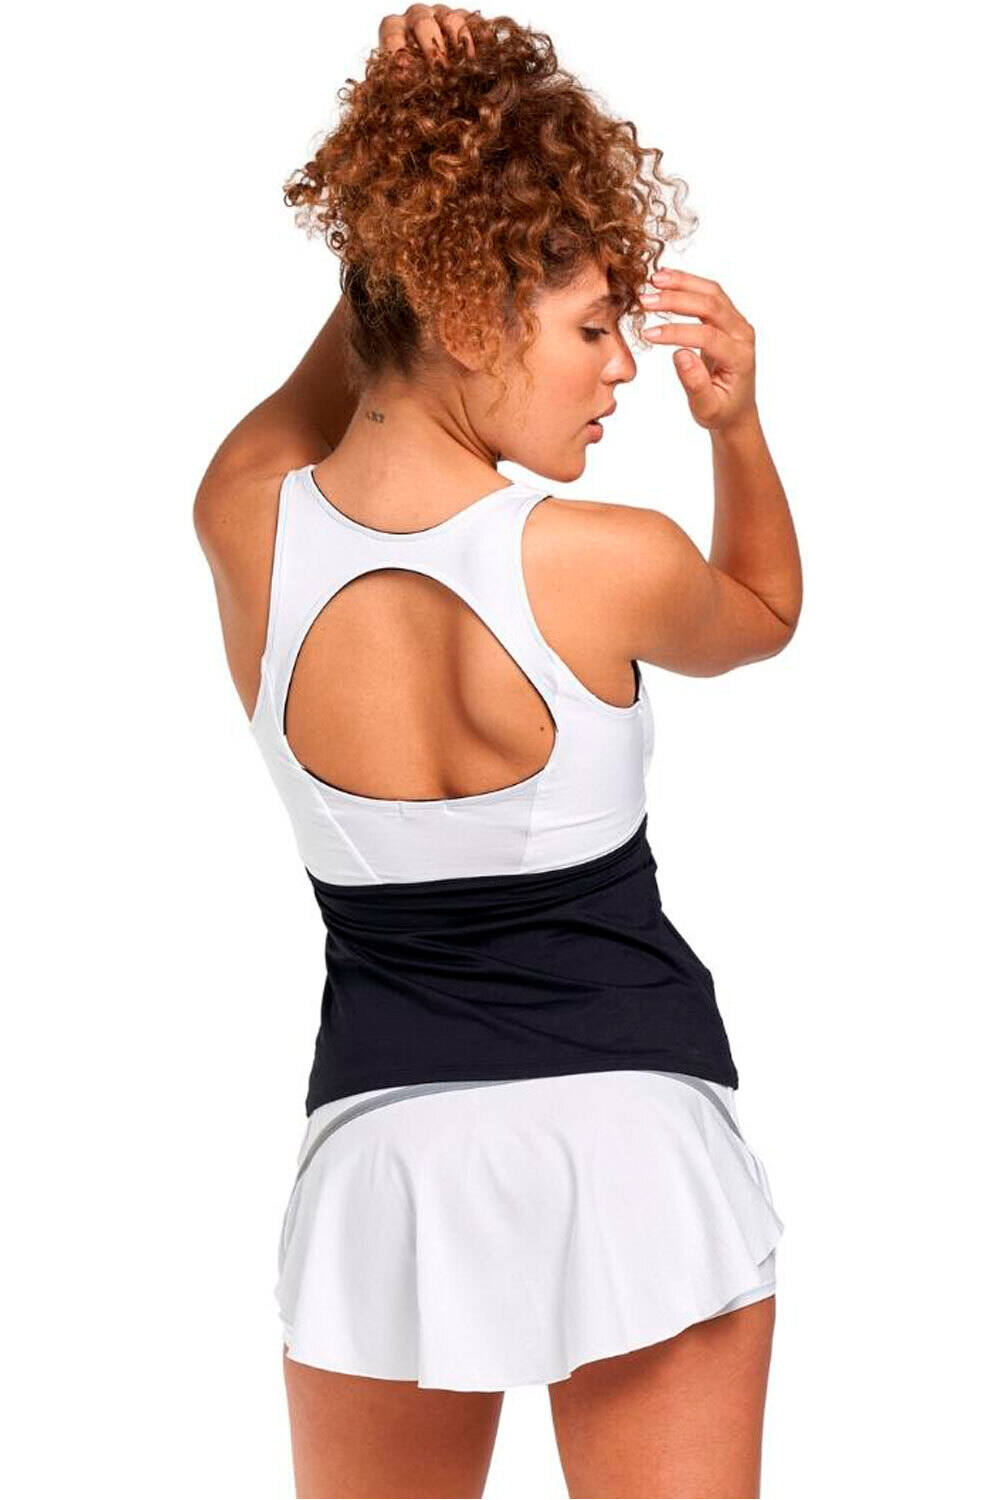 Neon camiseta tenis manga corta mujer JIMENA DAY vista trasera